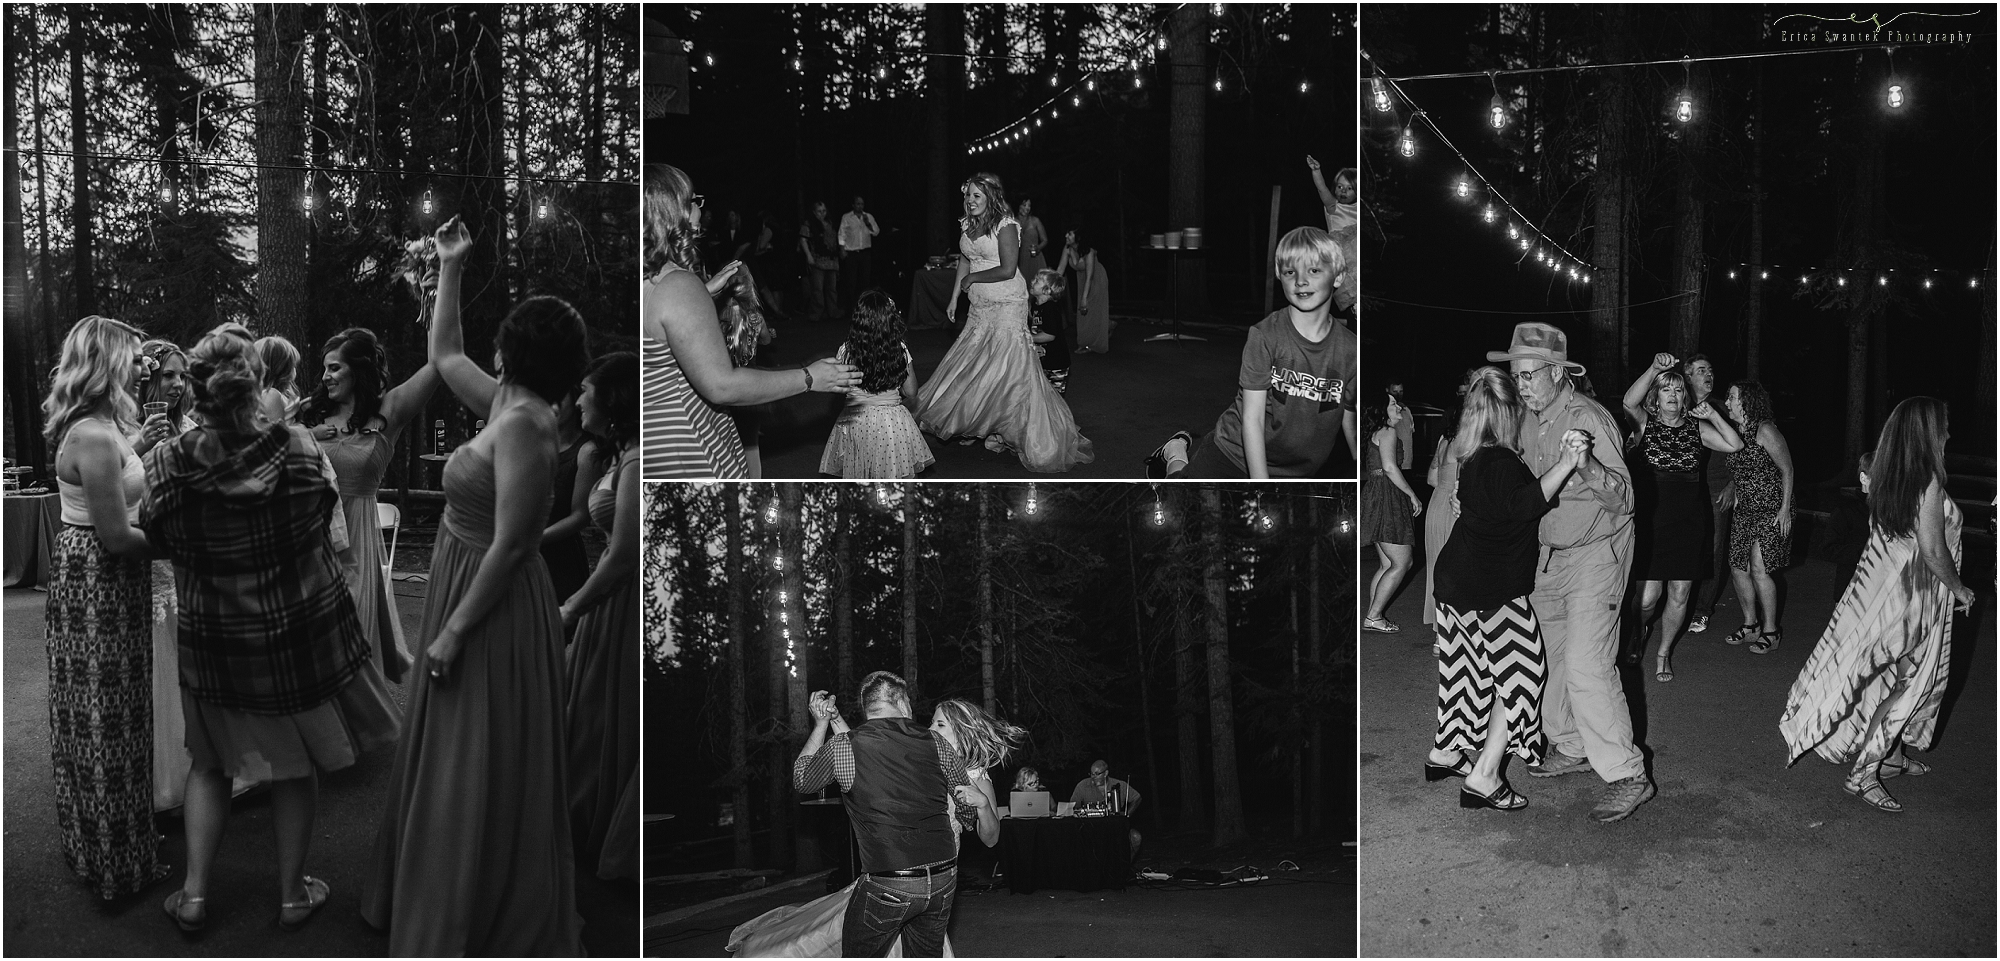 Outdoor Oregon wedding dance floor under the warm August summer night at Skyliner's Lodge in Bend. 